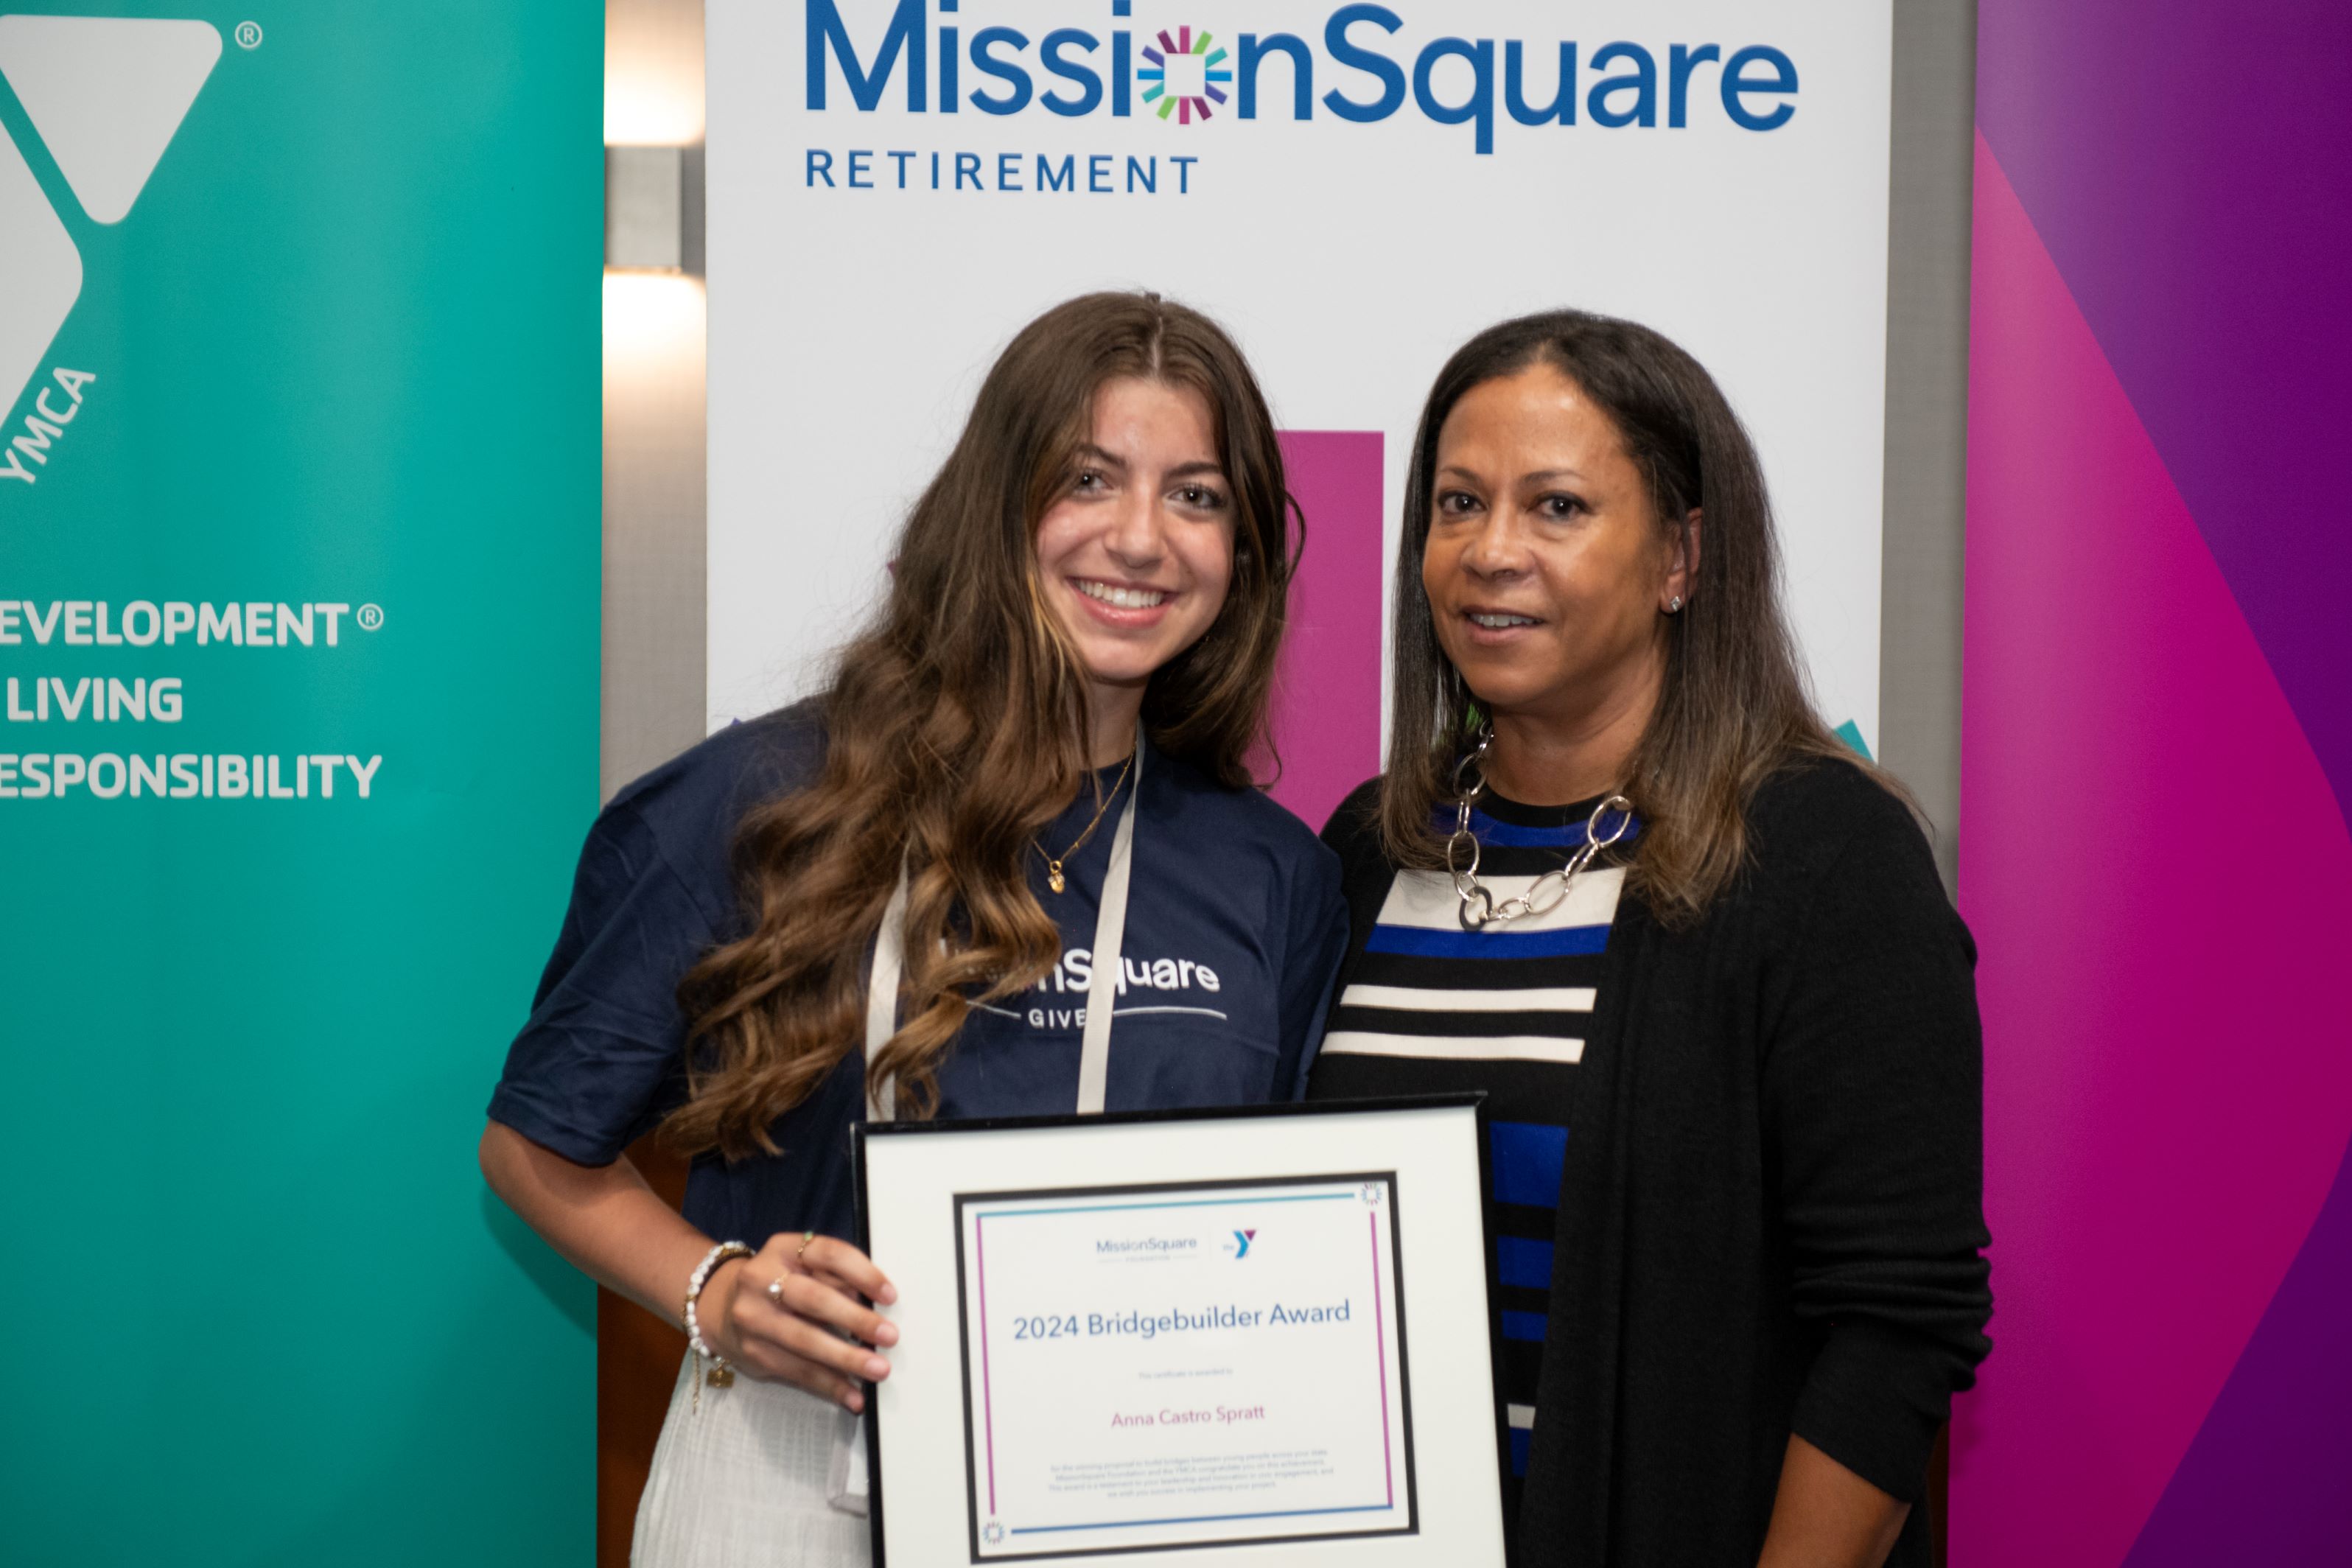 Angela Montez, Chief Legal, Corporate & Government Affairs Officer of MissionSquare Retirement presents the 2024 MissionSquare Bridgebuilder Award to Anna Castro Spratt of South Carolina.